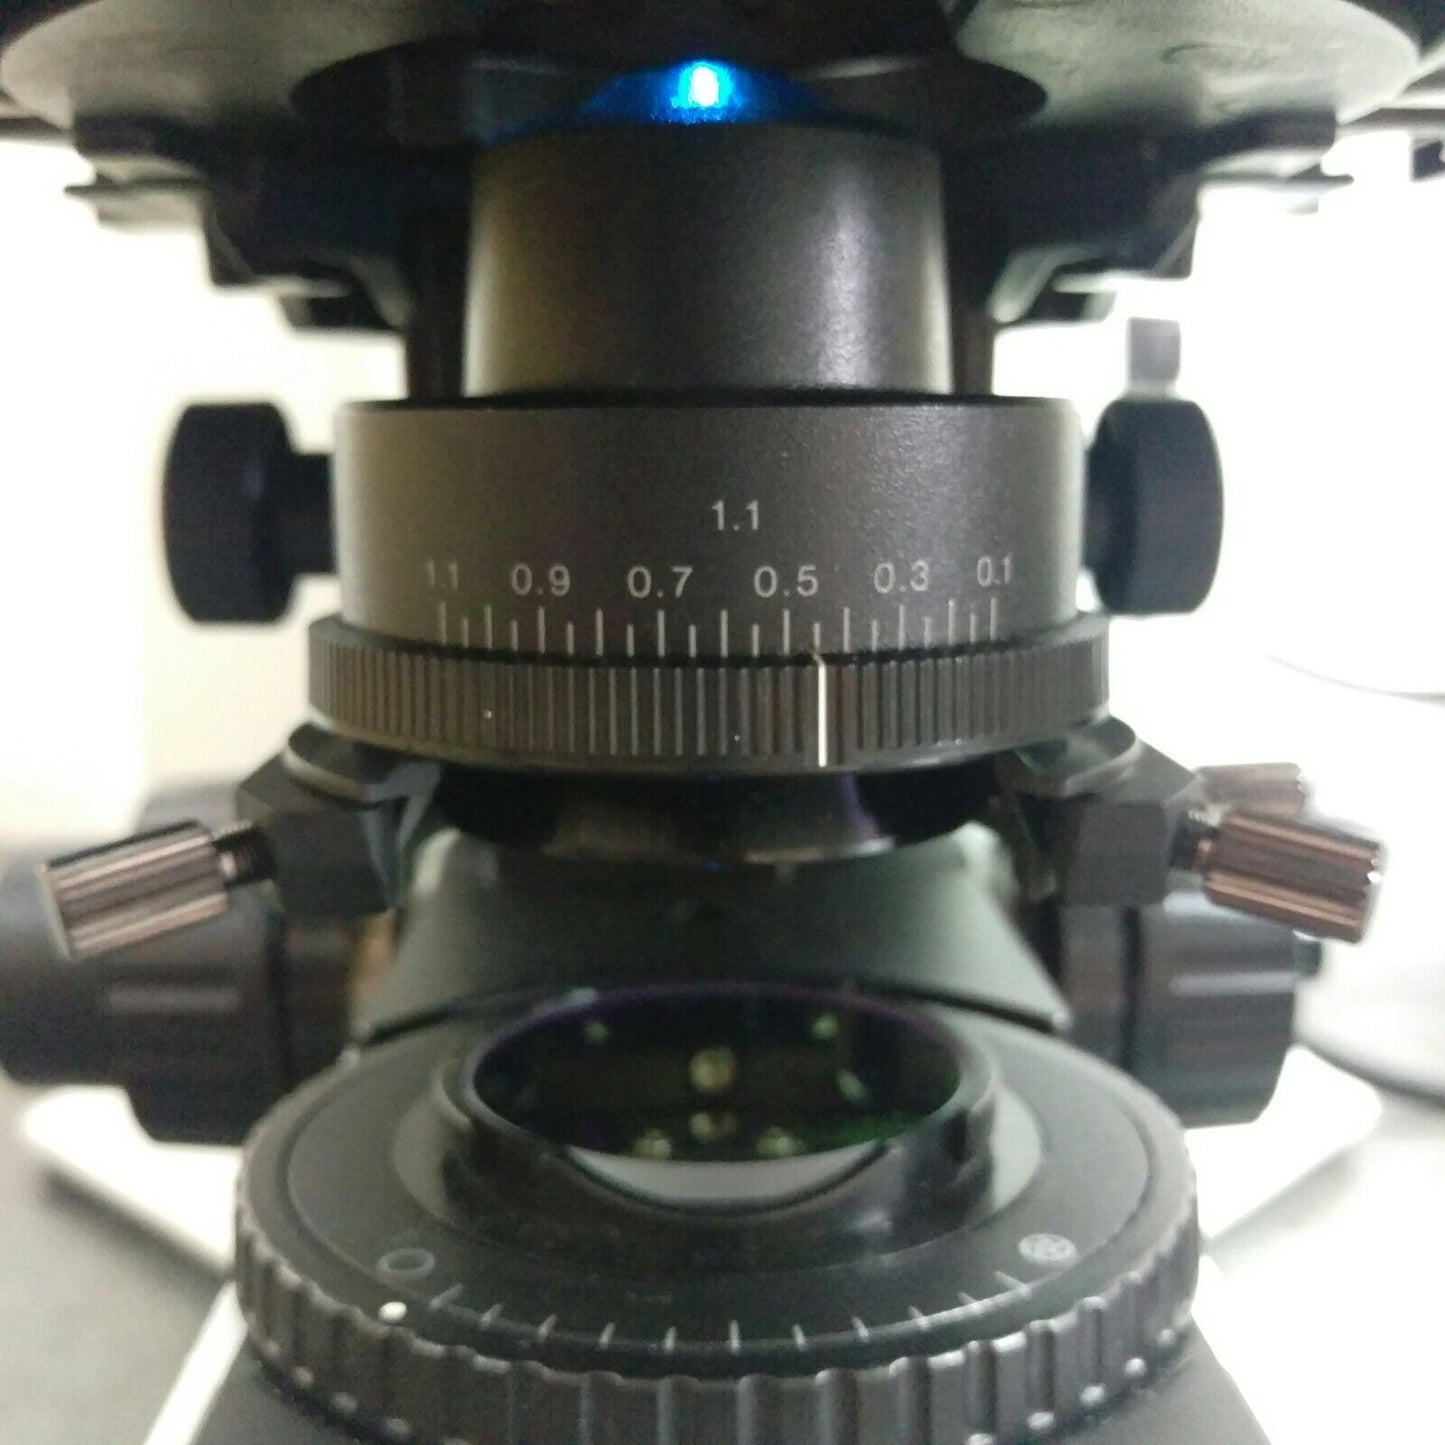 Olympus Microscope BX41 Fluorescence - microscopemarketplace